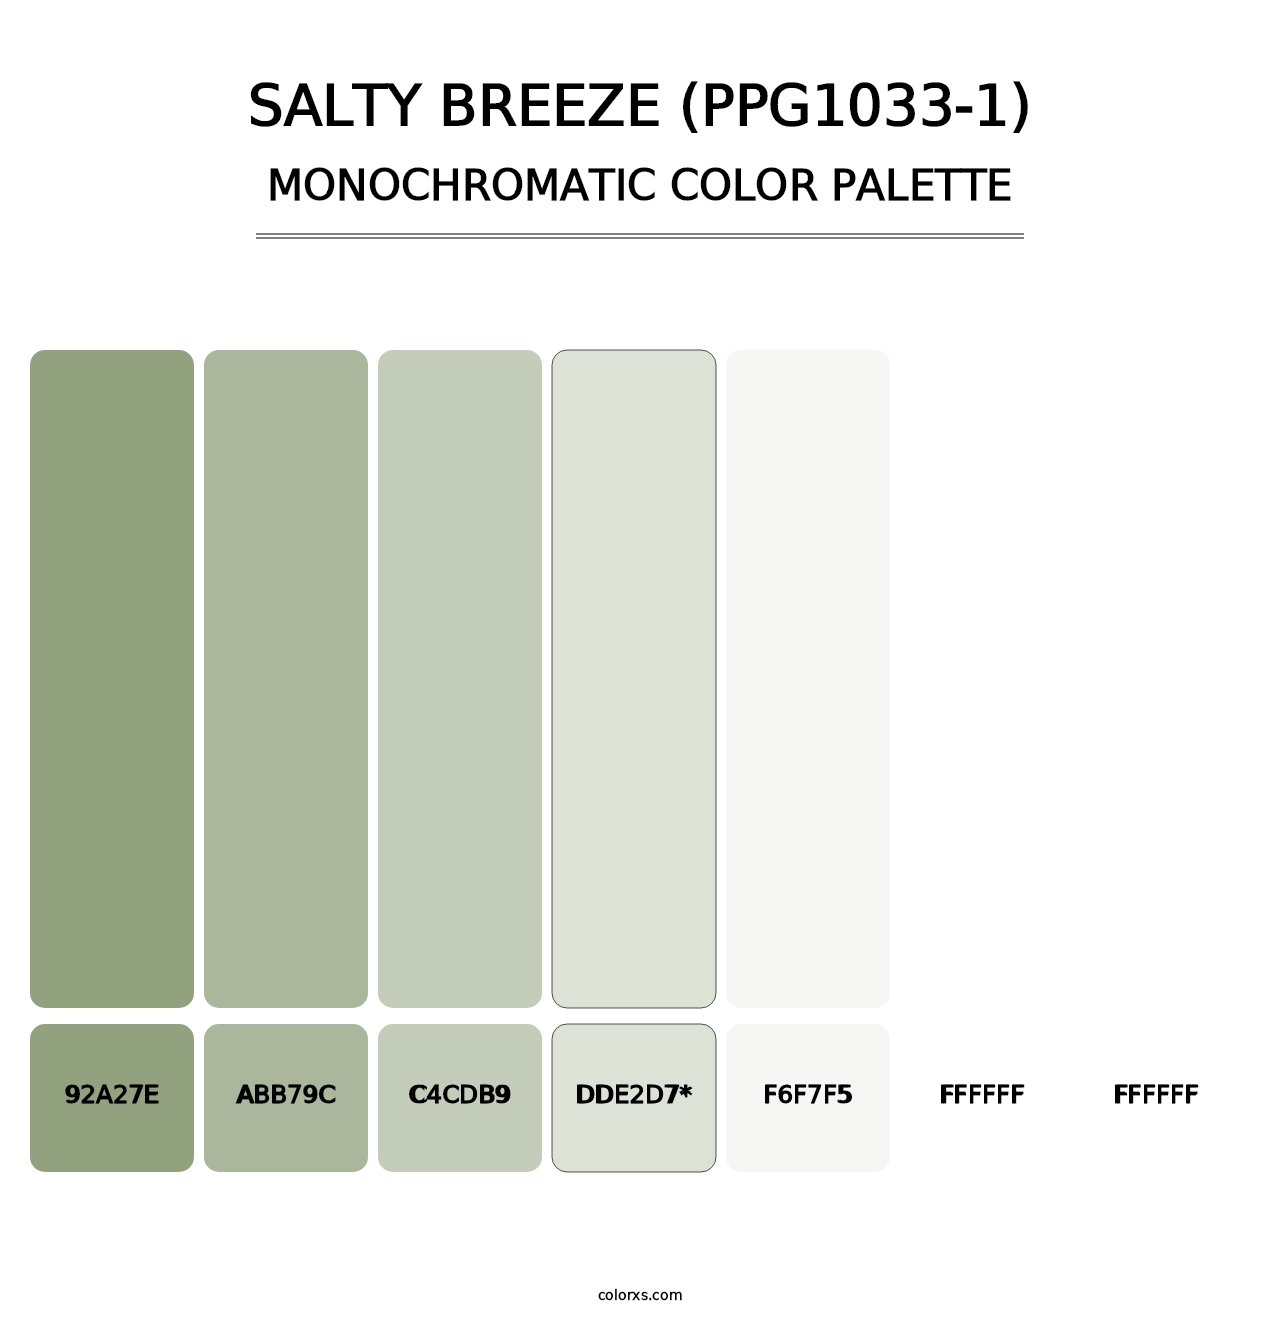 Salty Breeze (PPG1033-1) - Monochromatic Color Palette